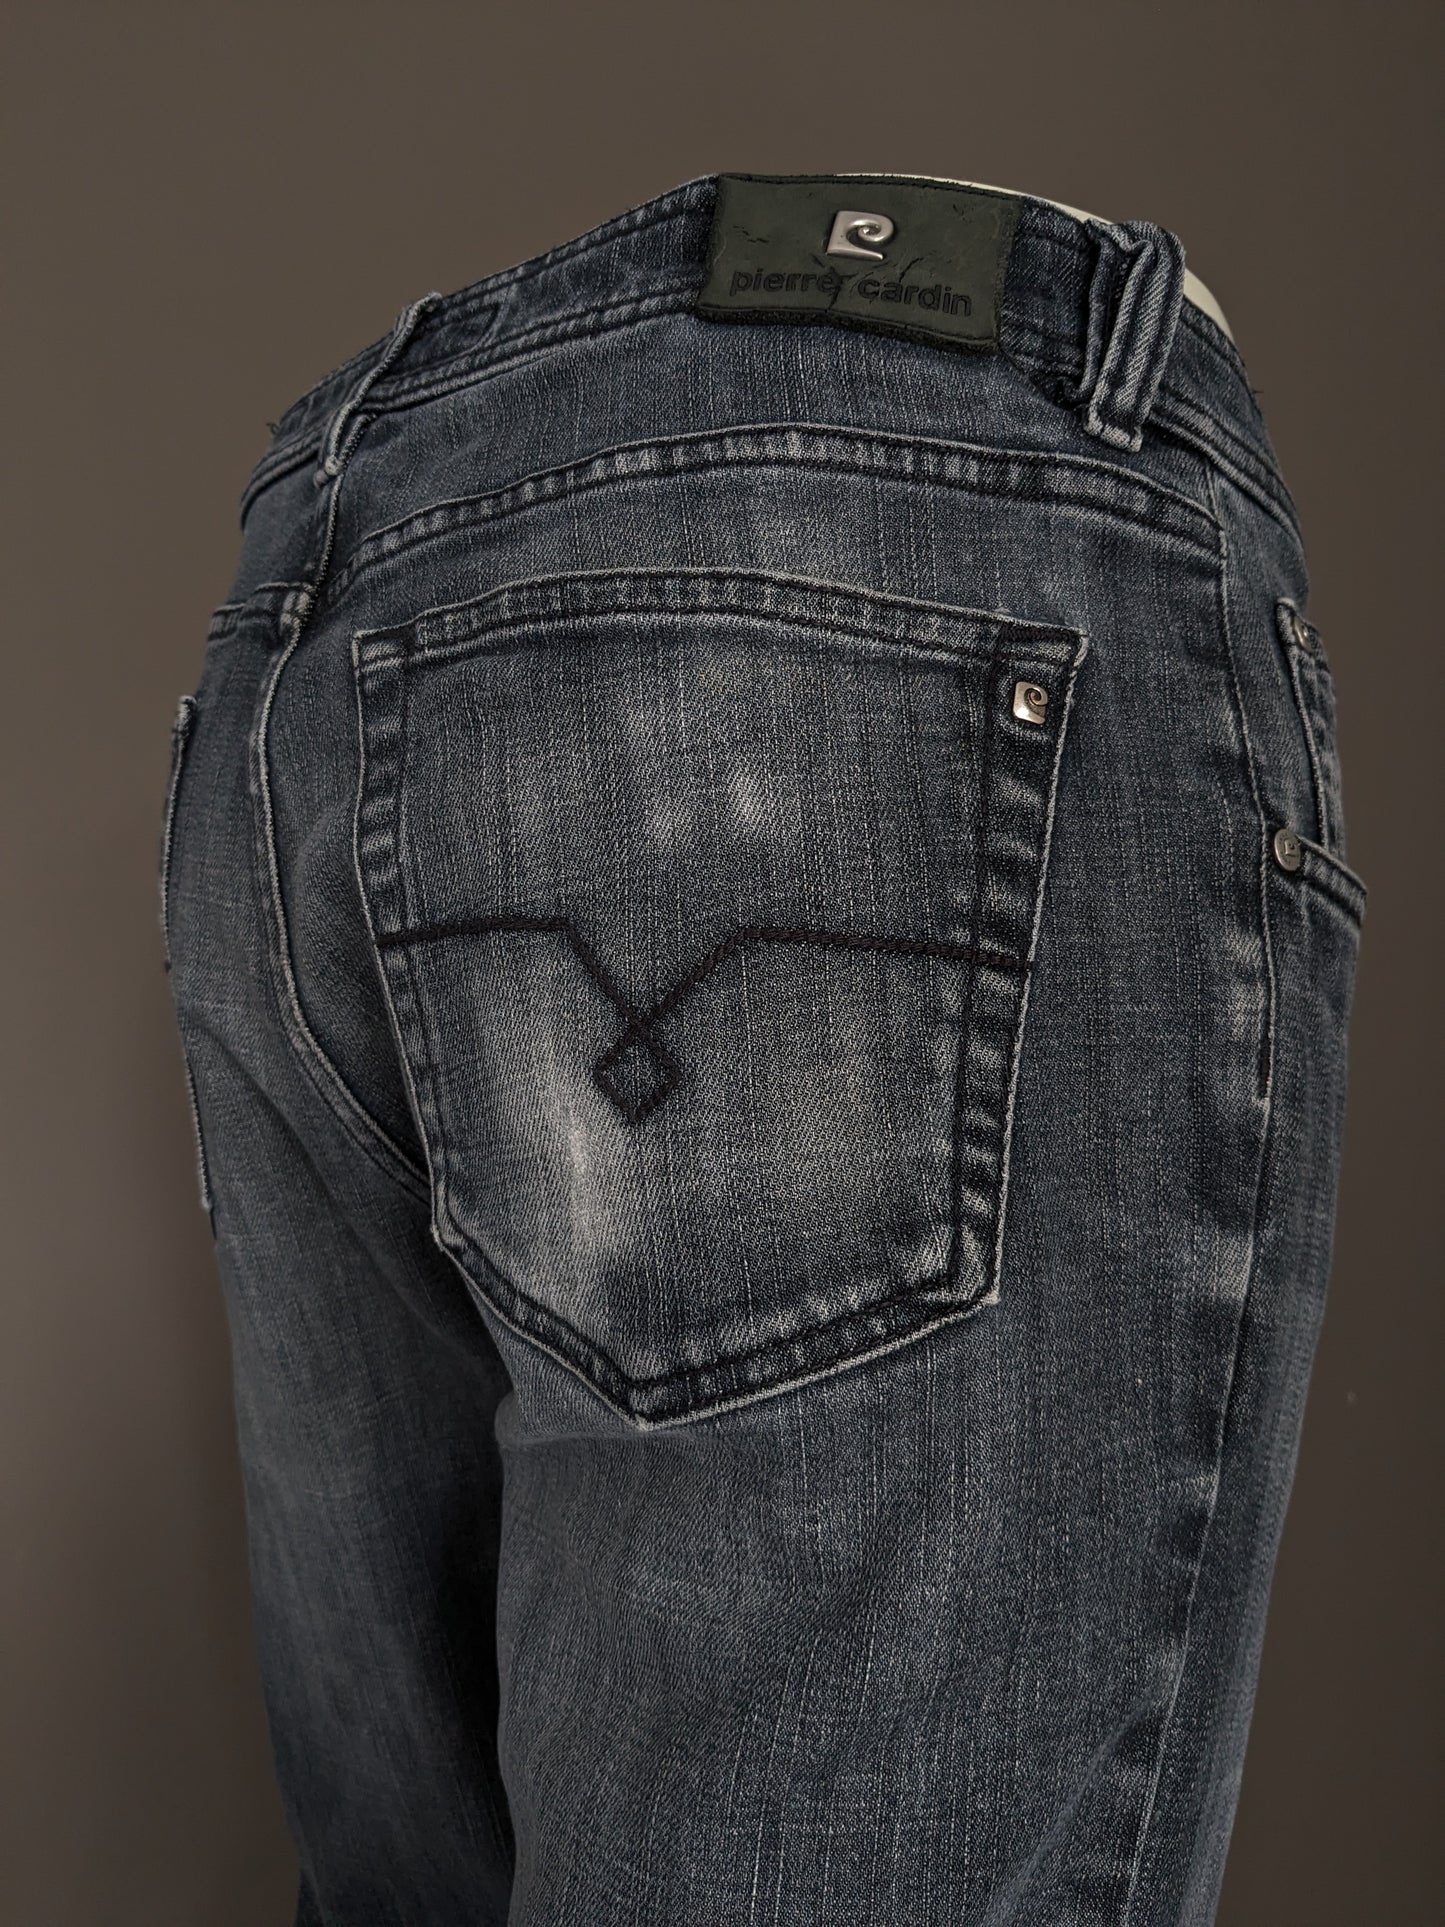 Pierre Cardin Jeans. Color negro de color gris. Tamaño W33 - L30. Escriba mod deauville.